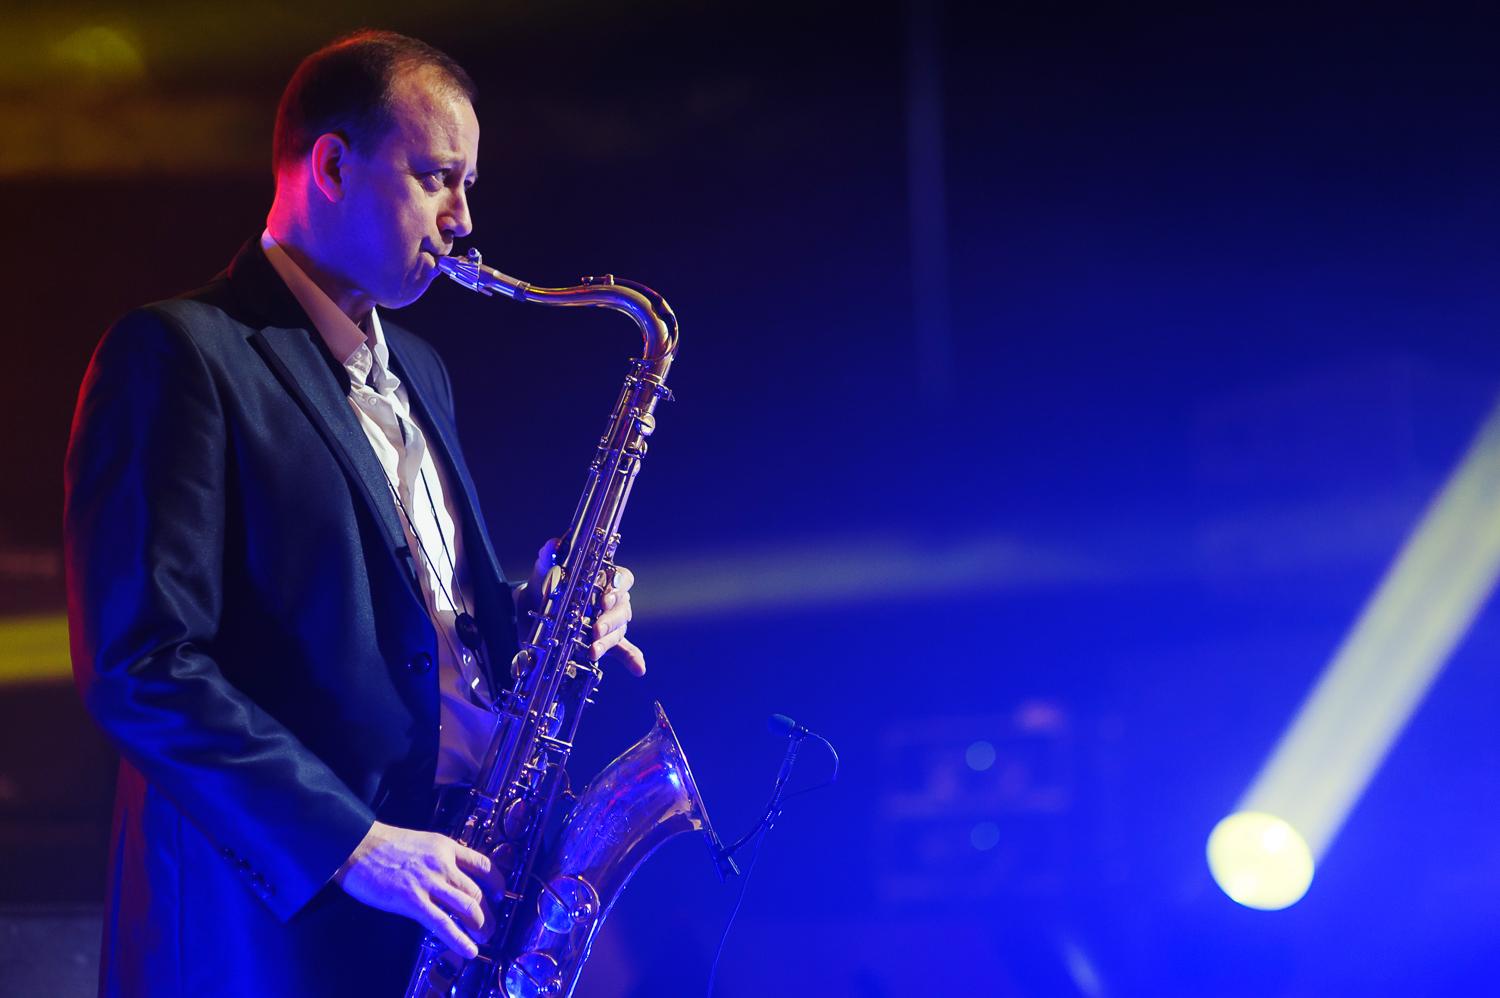 Классика саксофонного джаза – Марк Иванцов (саксофон) и резиденты EverJazz